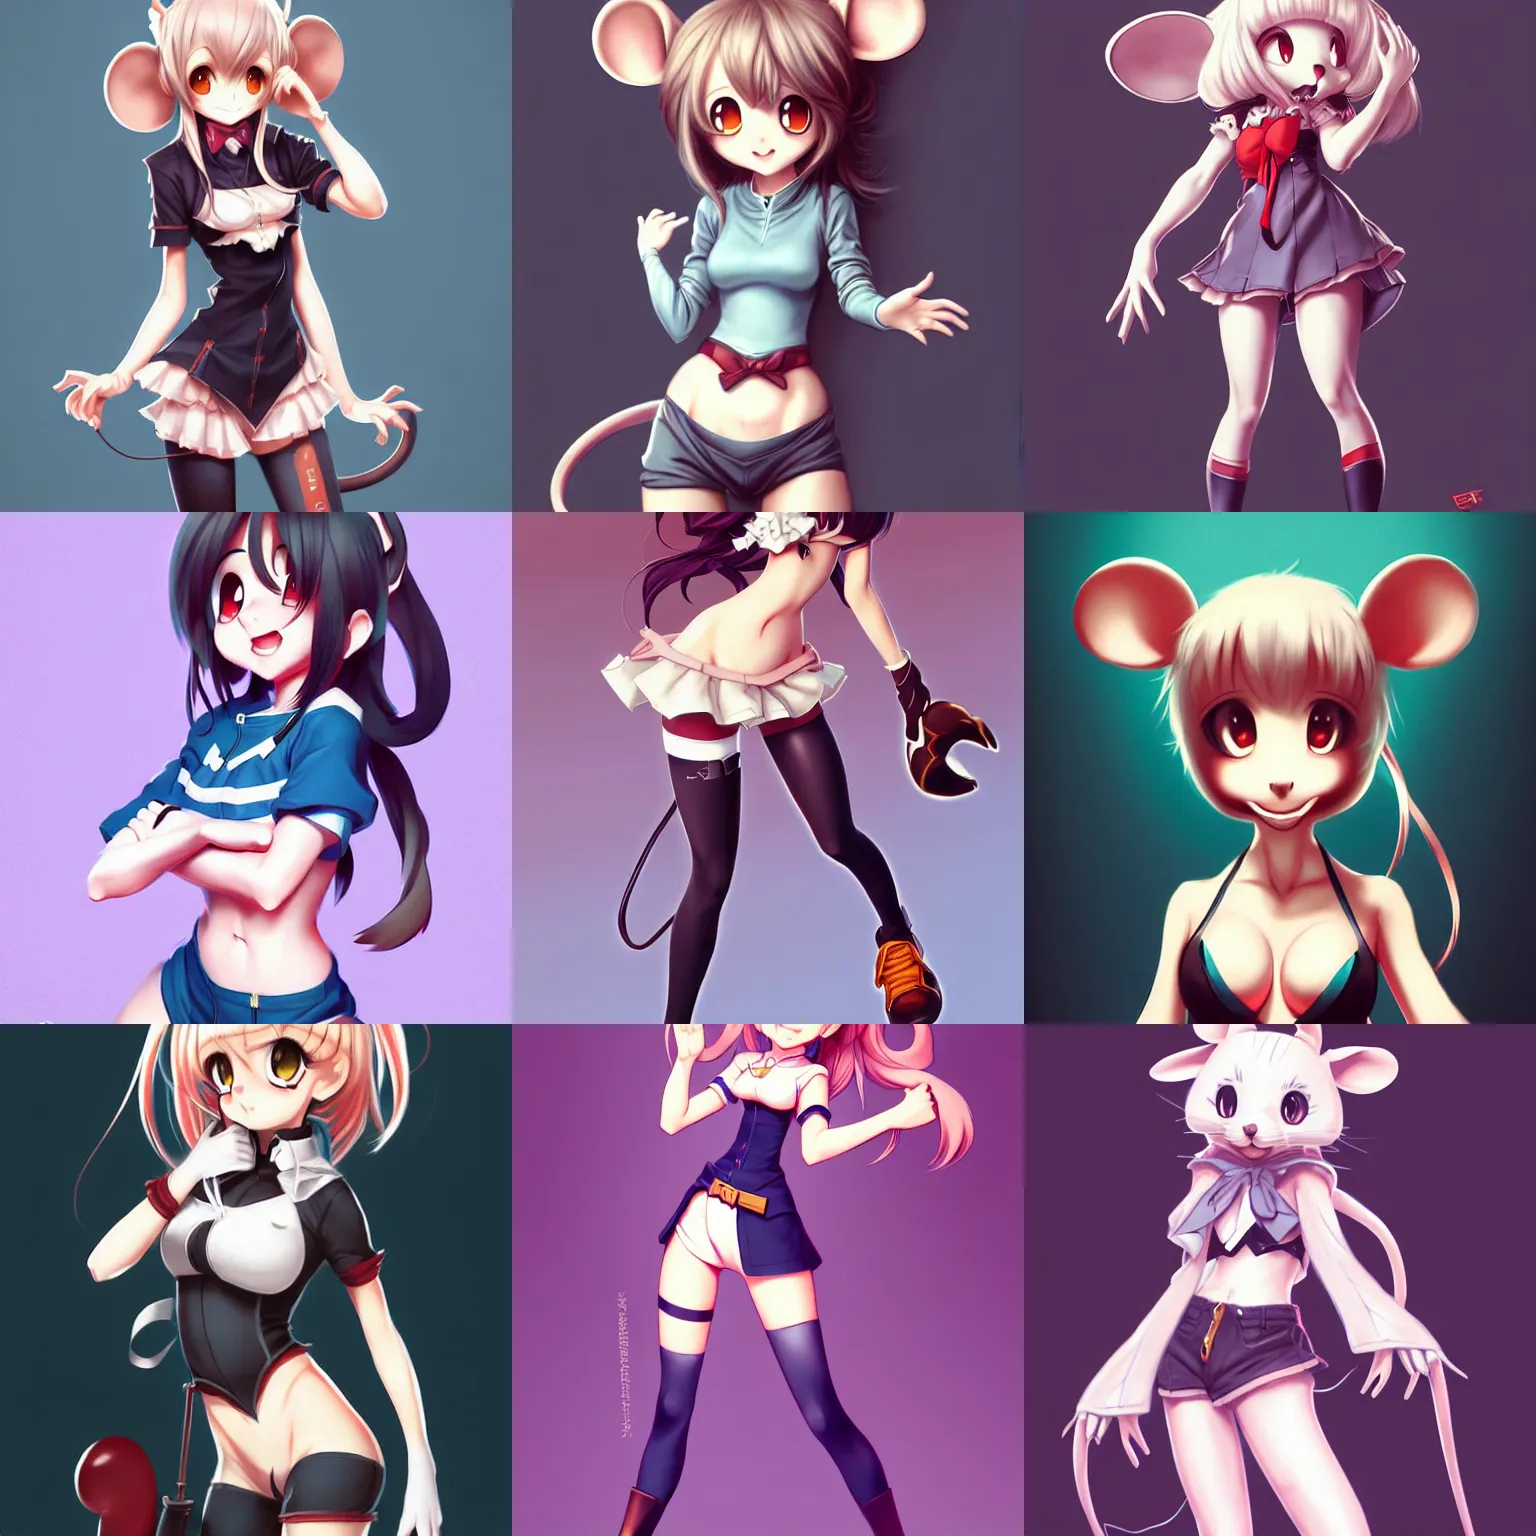 Prompt: fullbody portrait of anthropomorphic half - mouse cute anime girl, concept art, anime art, by a - 1 picture, trending on artstation artgerm, ross tran, bill ward, marc davis,